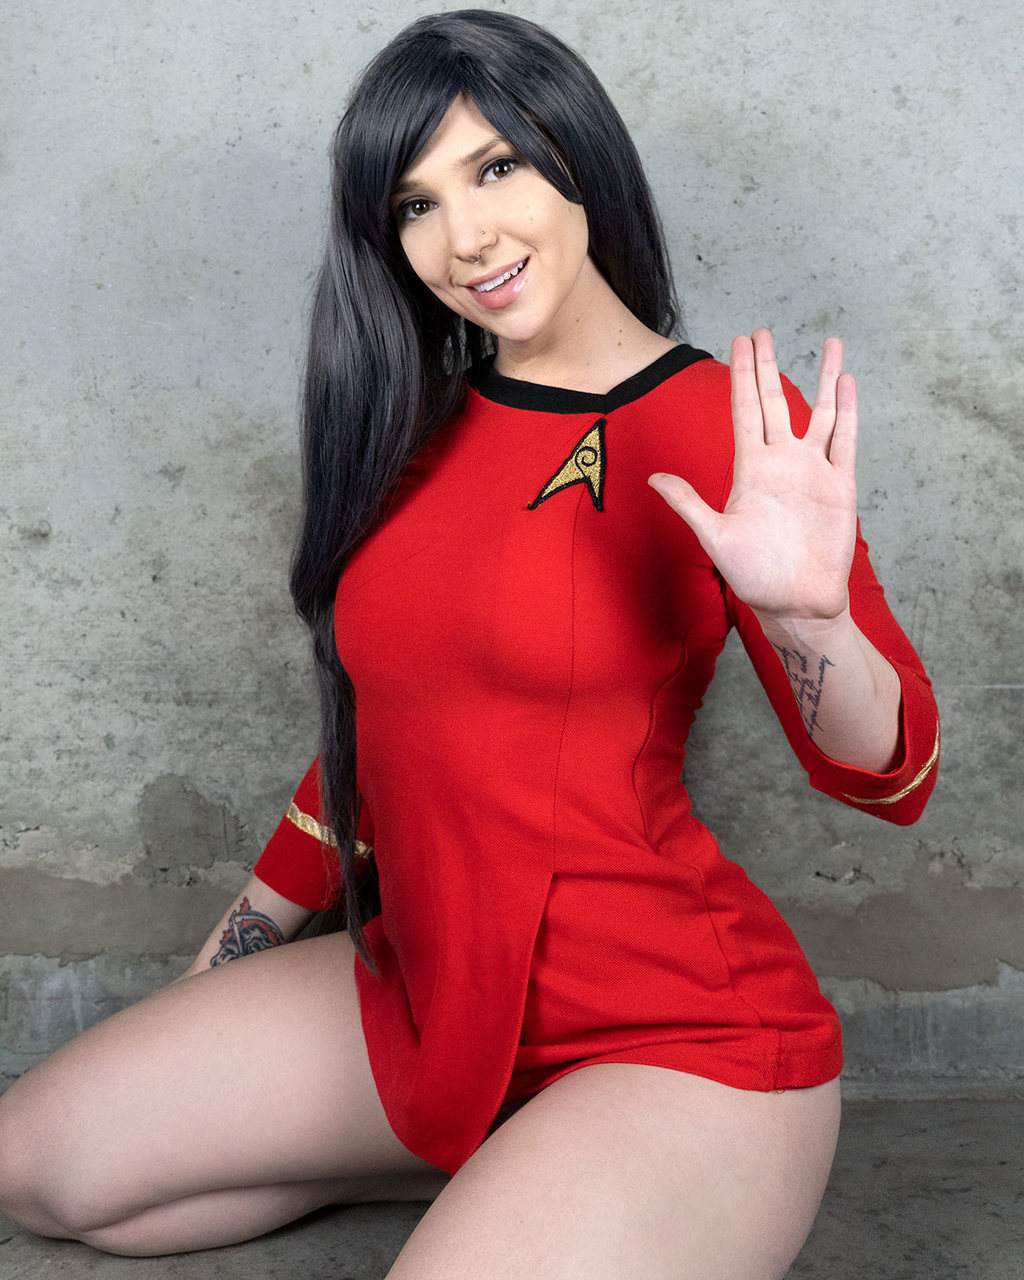 Starfleet Crew Woman By Shycospla